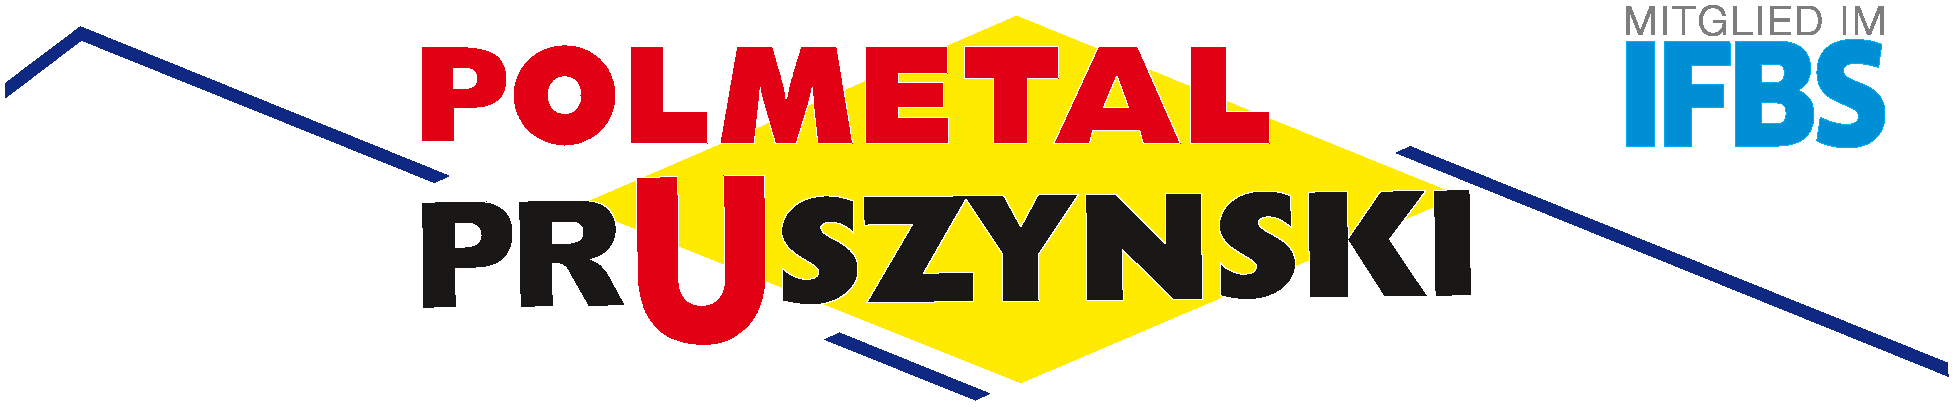 Polmetal Pruszynski